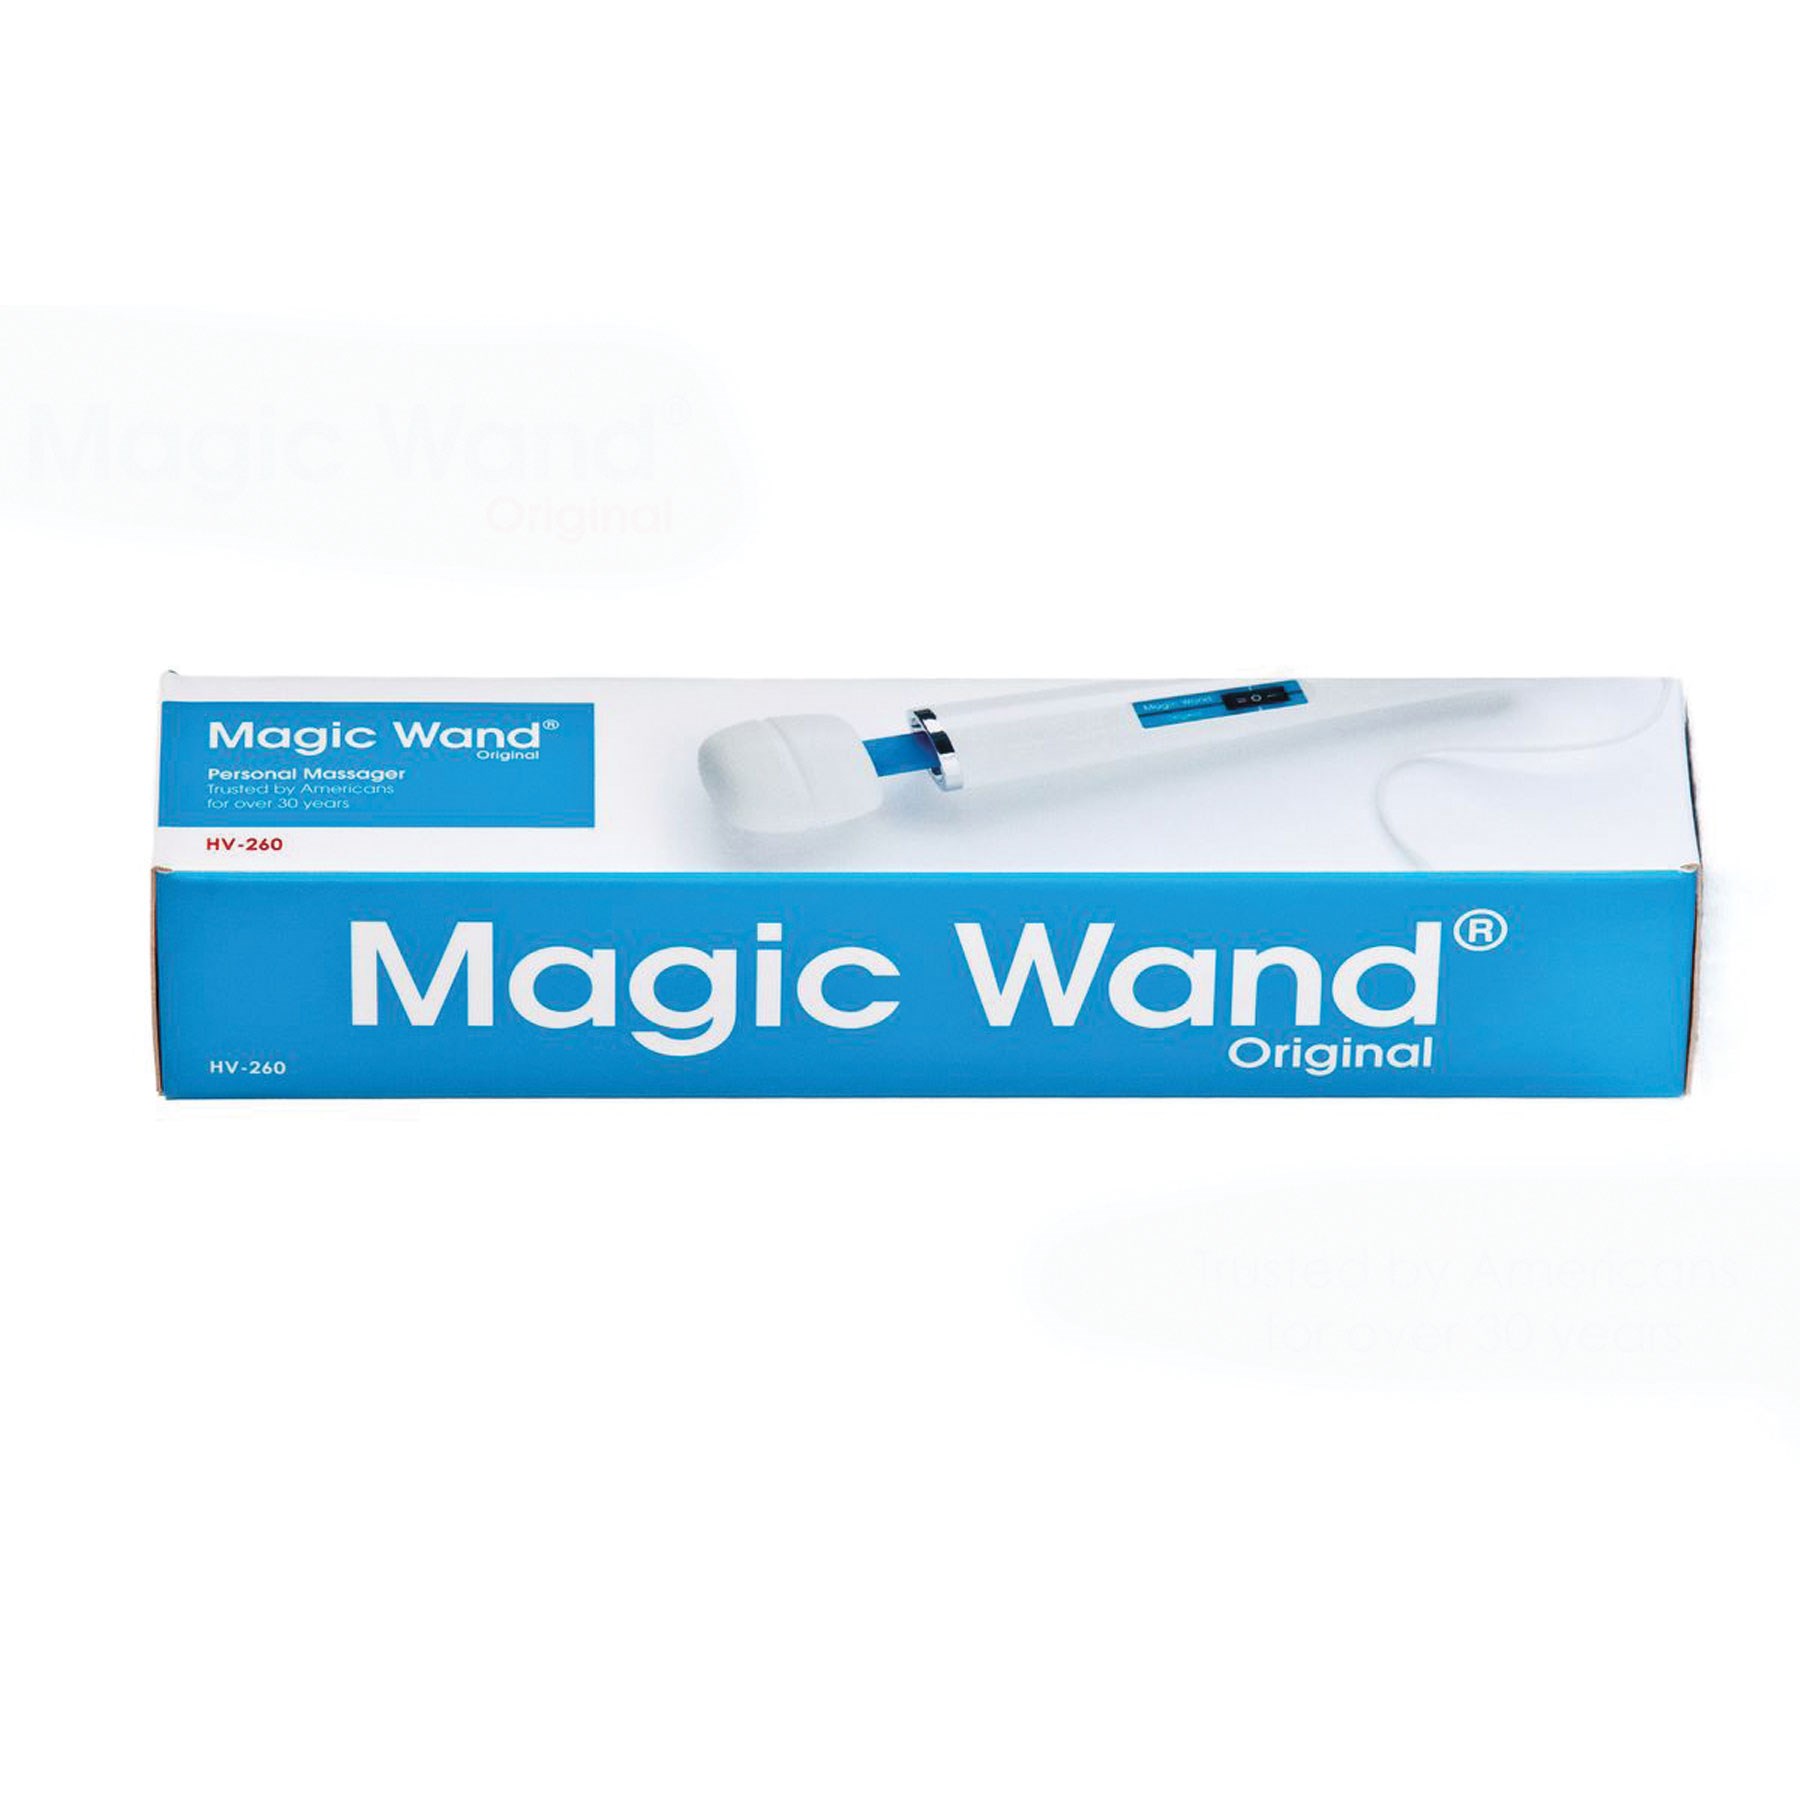 Magic Wand Original box